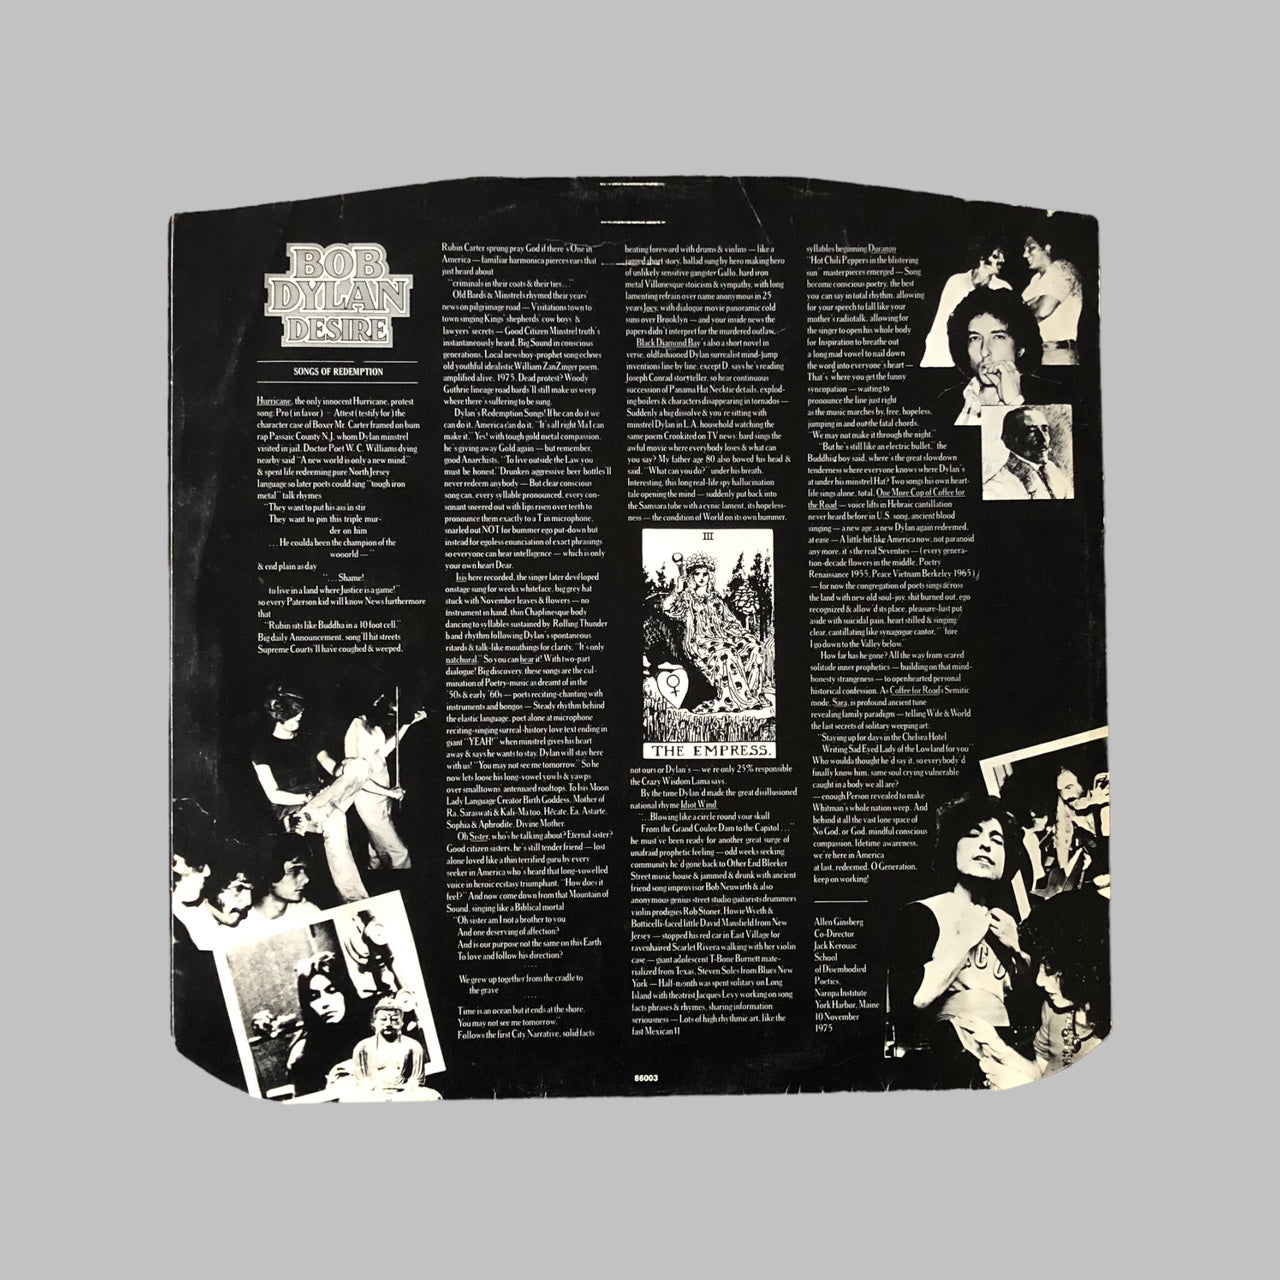 LP Vinyl - Bob Dylan - Desire.